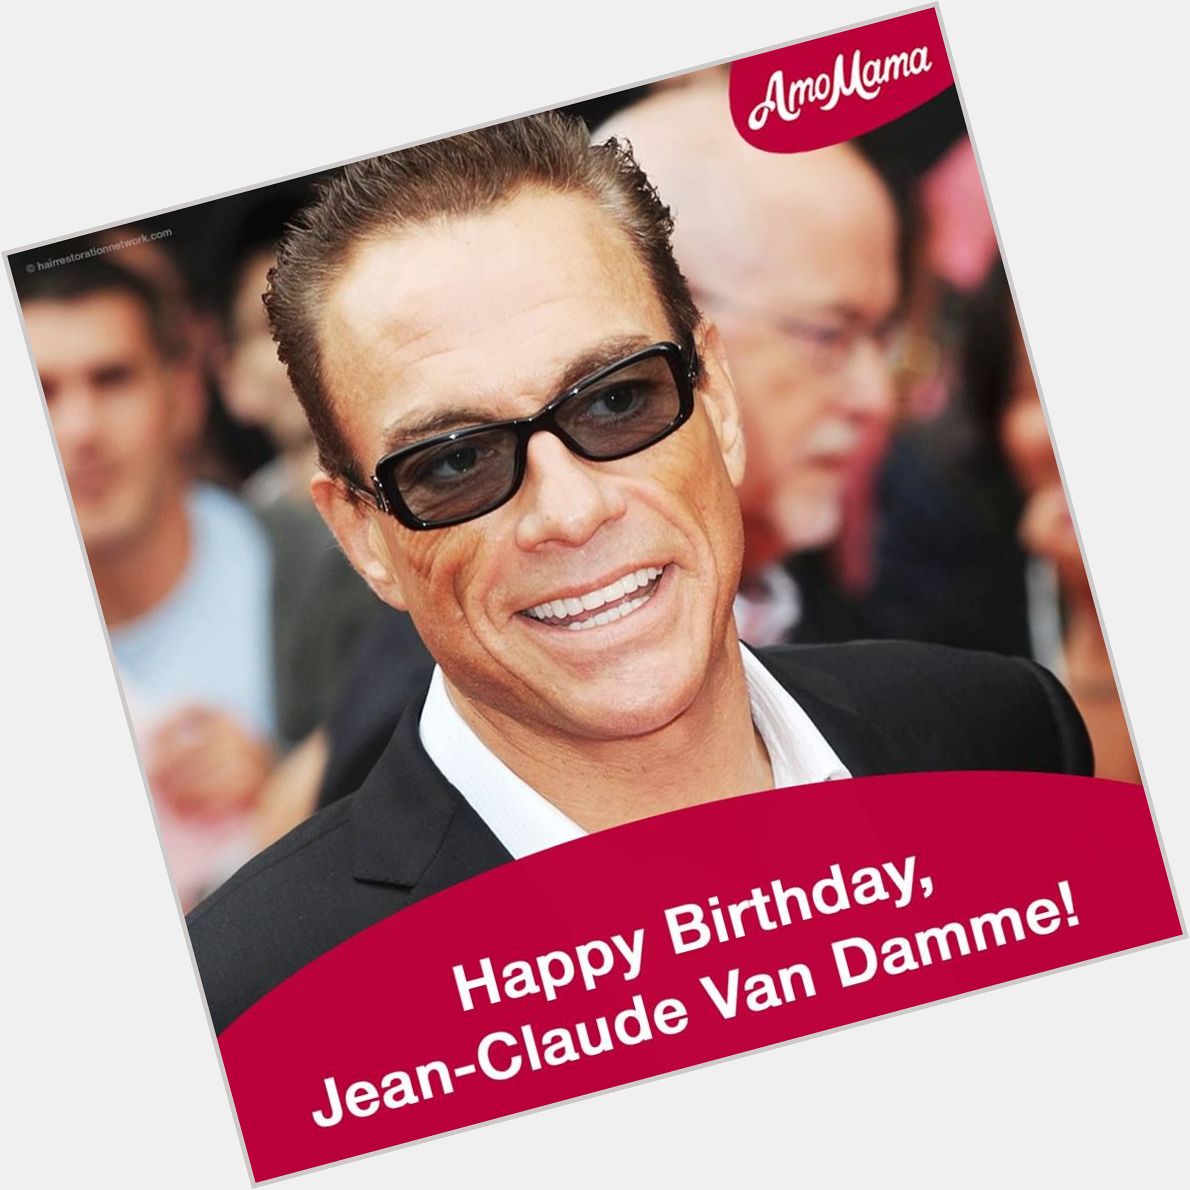 Jean-Claude Van Damme turned 58! Happy Birthday!  